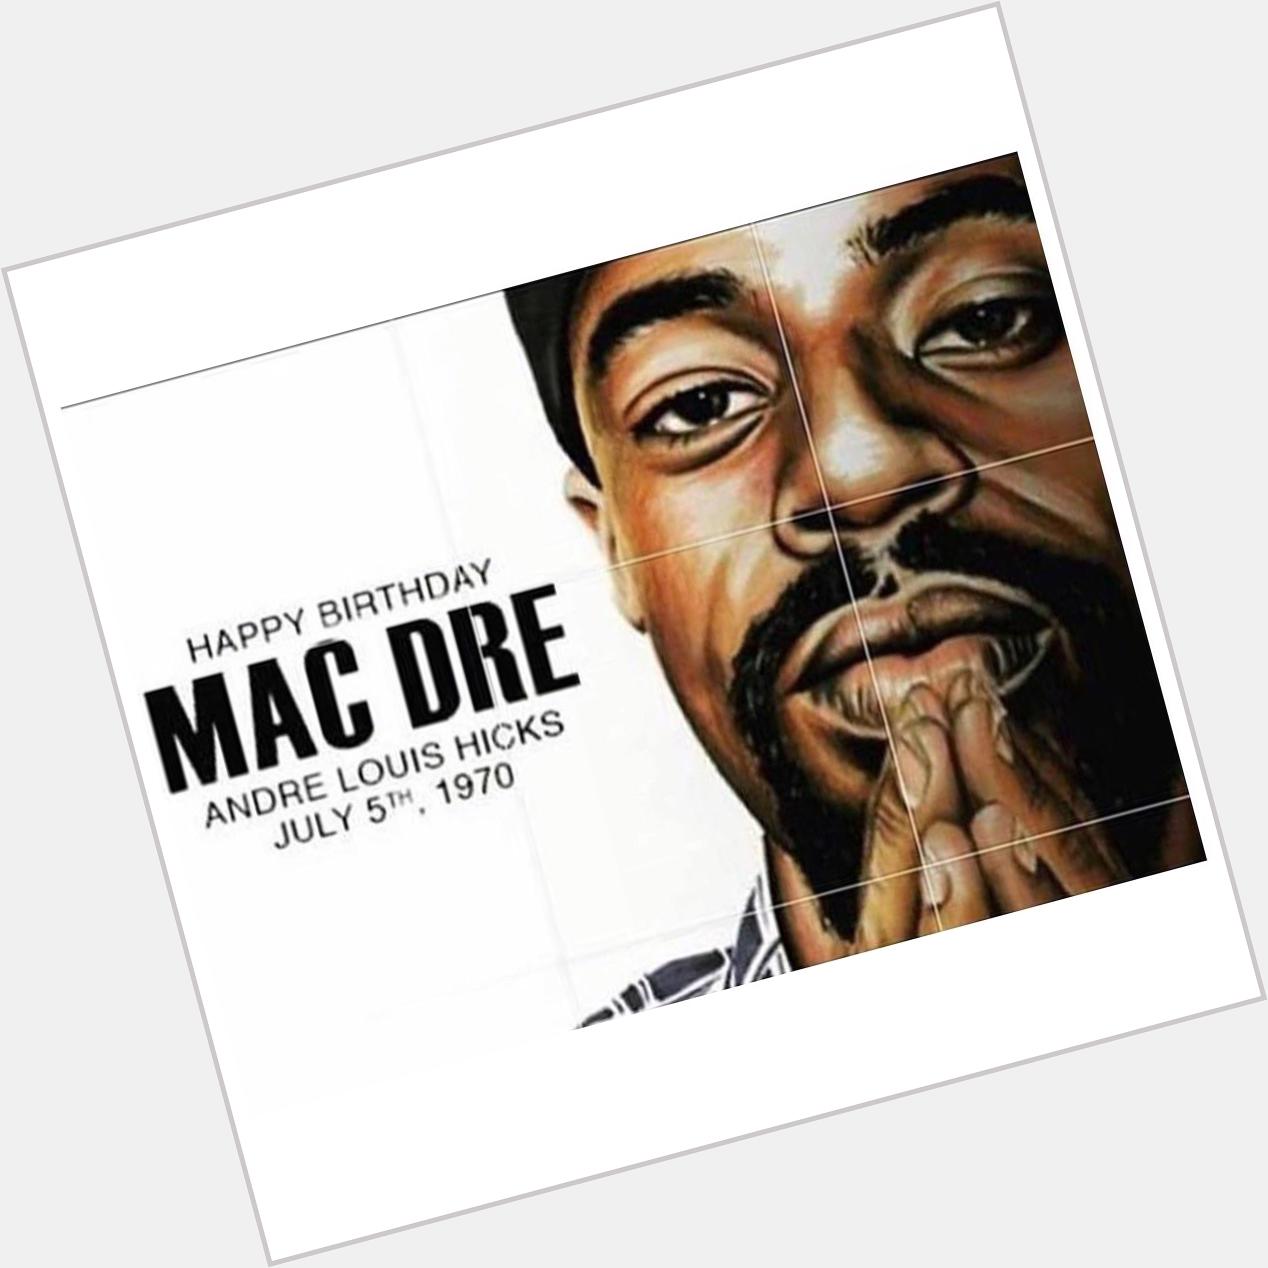 Happy Birthday to the legendary MAC DRE 